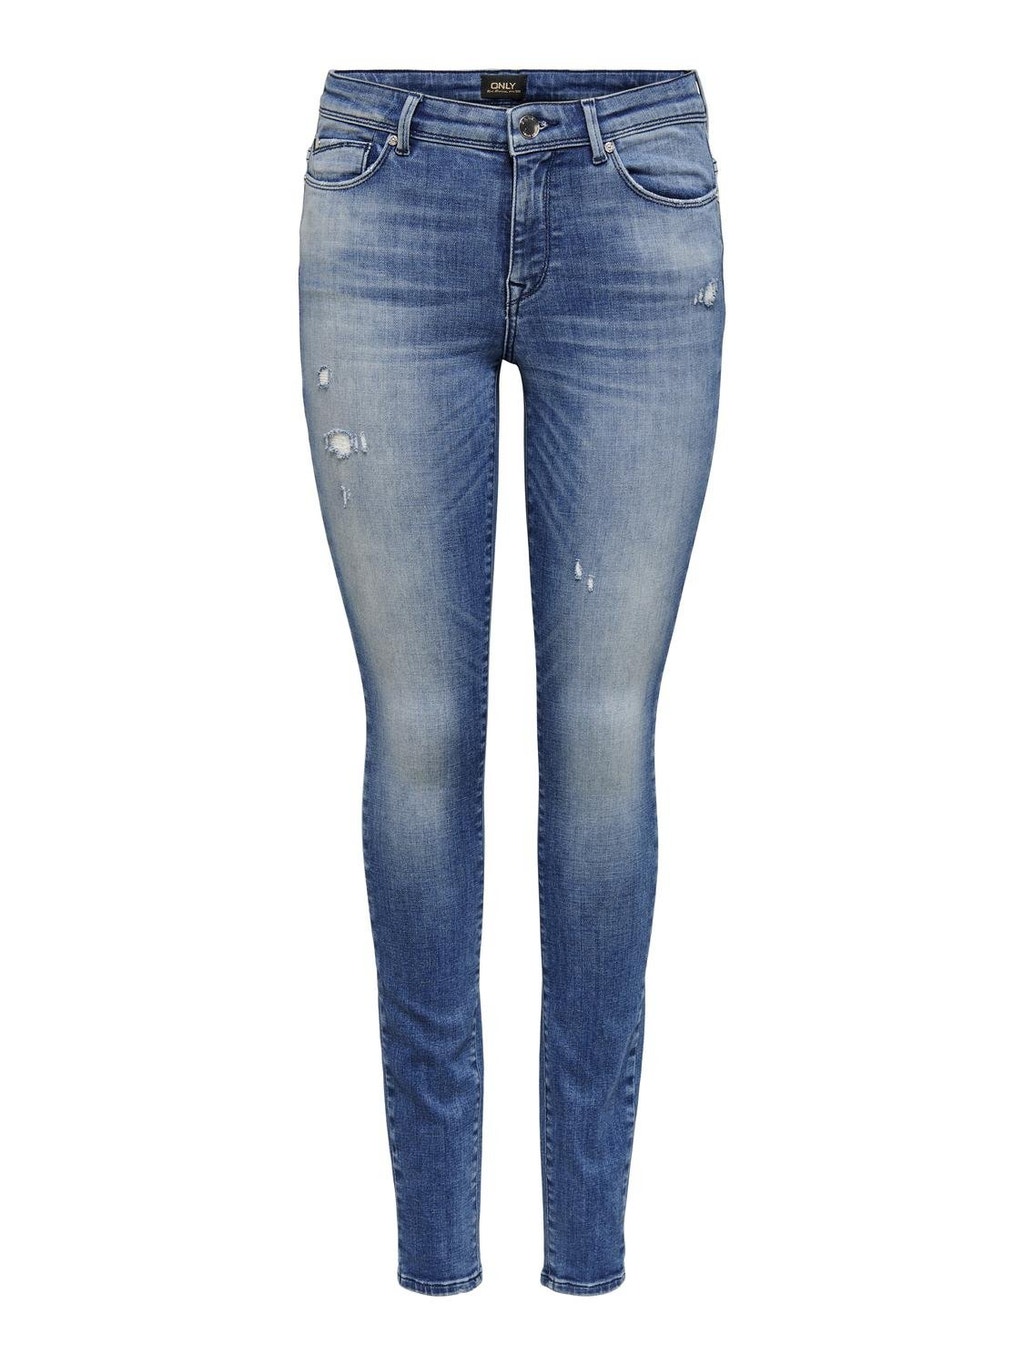 ONLShape Life Reg Skinny fit jeans | Medium Blue | ONLY®